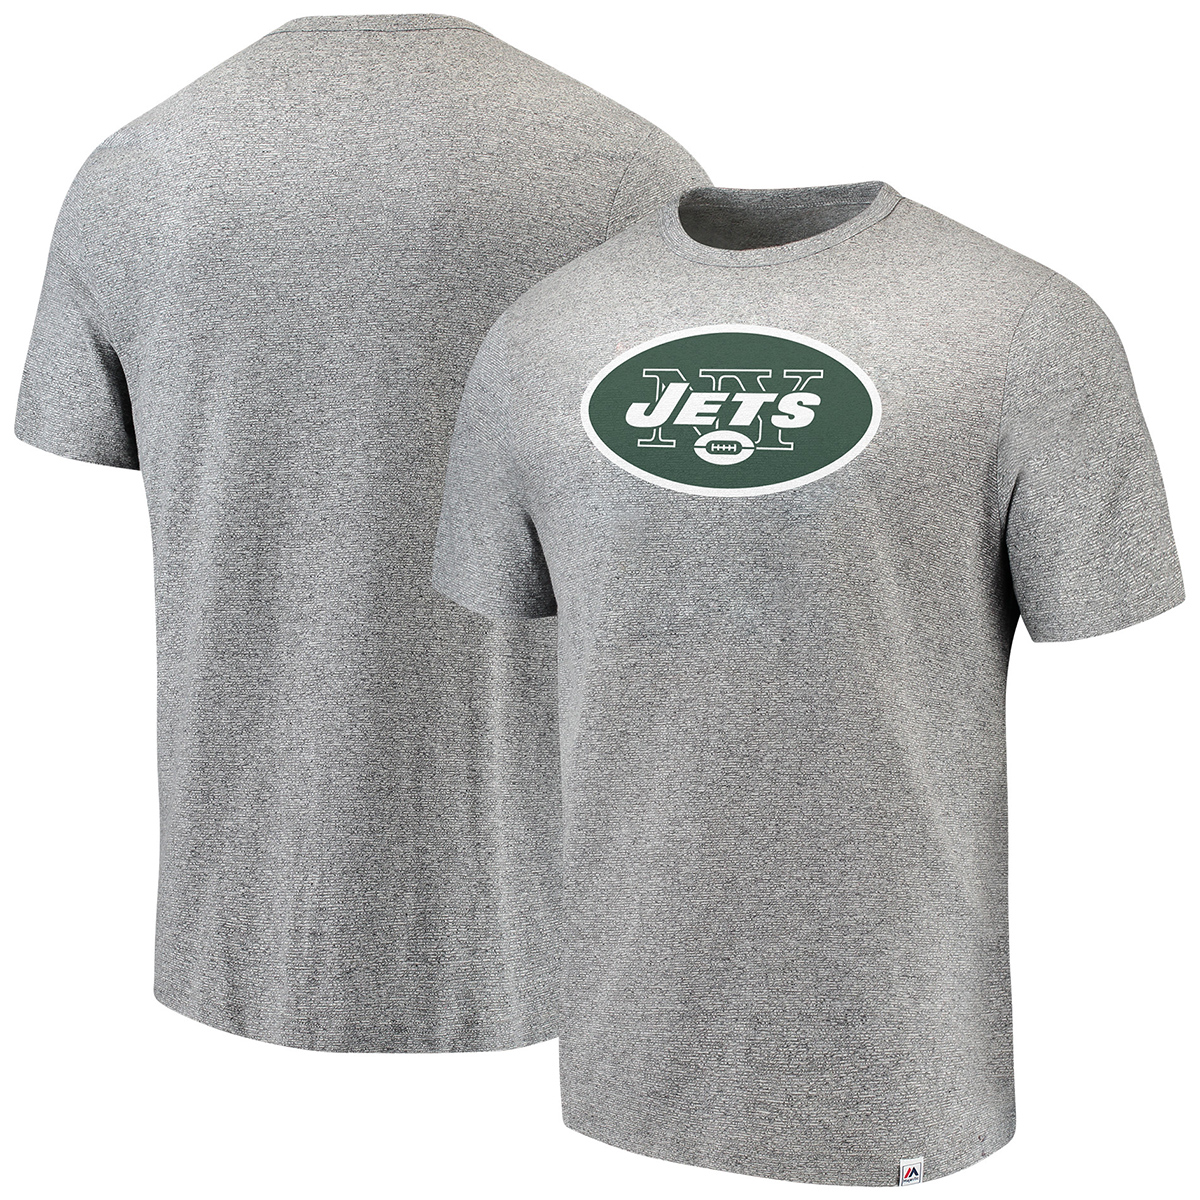 New York Jets Men's Power Slot Short-Sleeve Tee - Black, XL